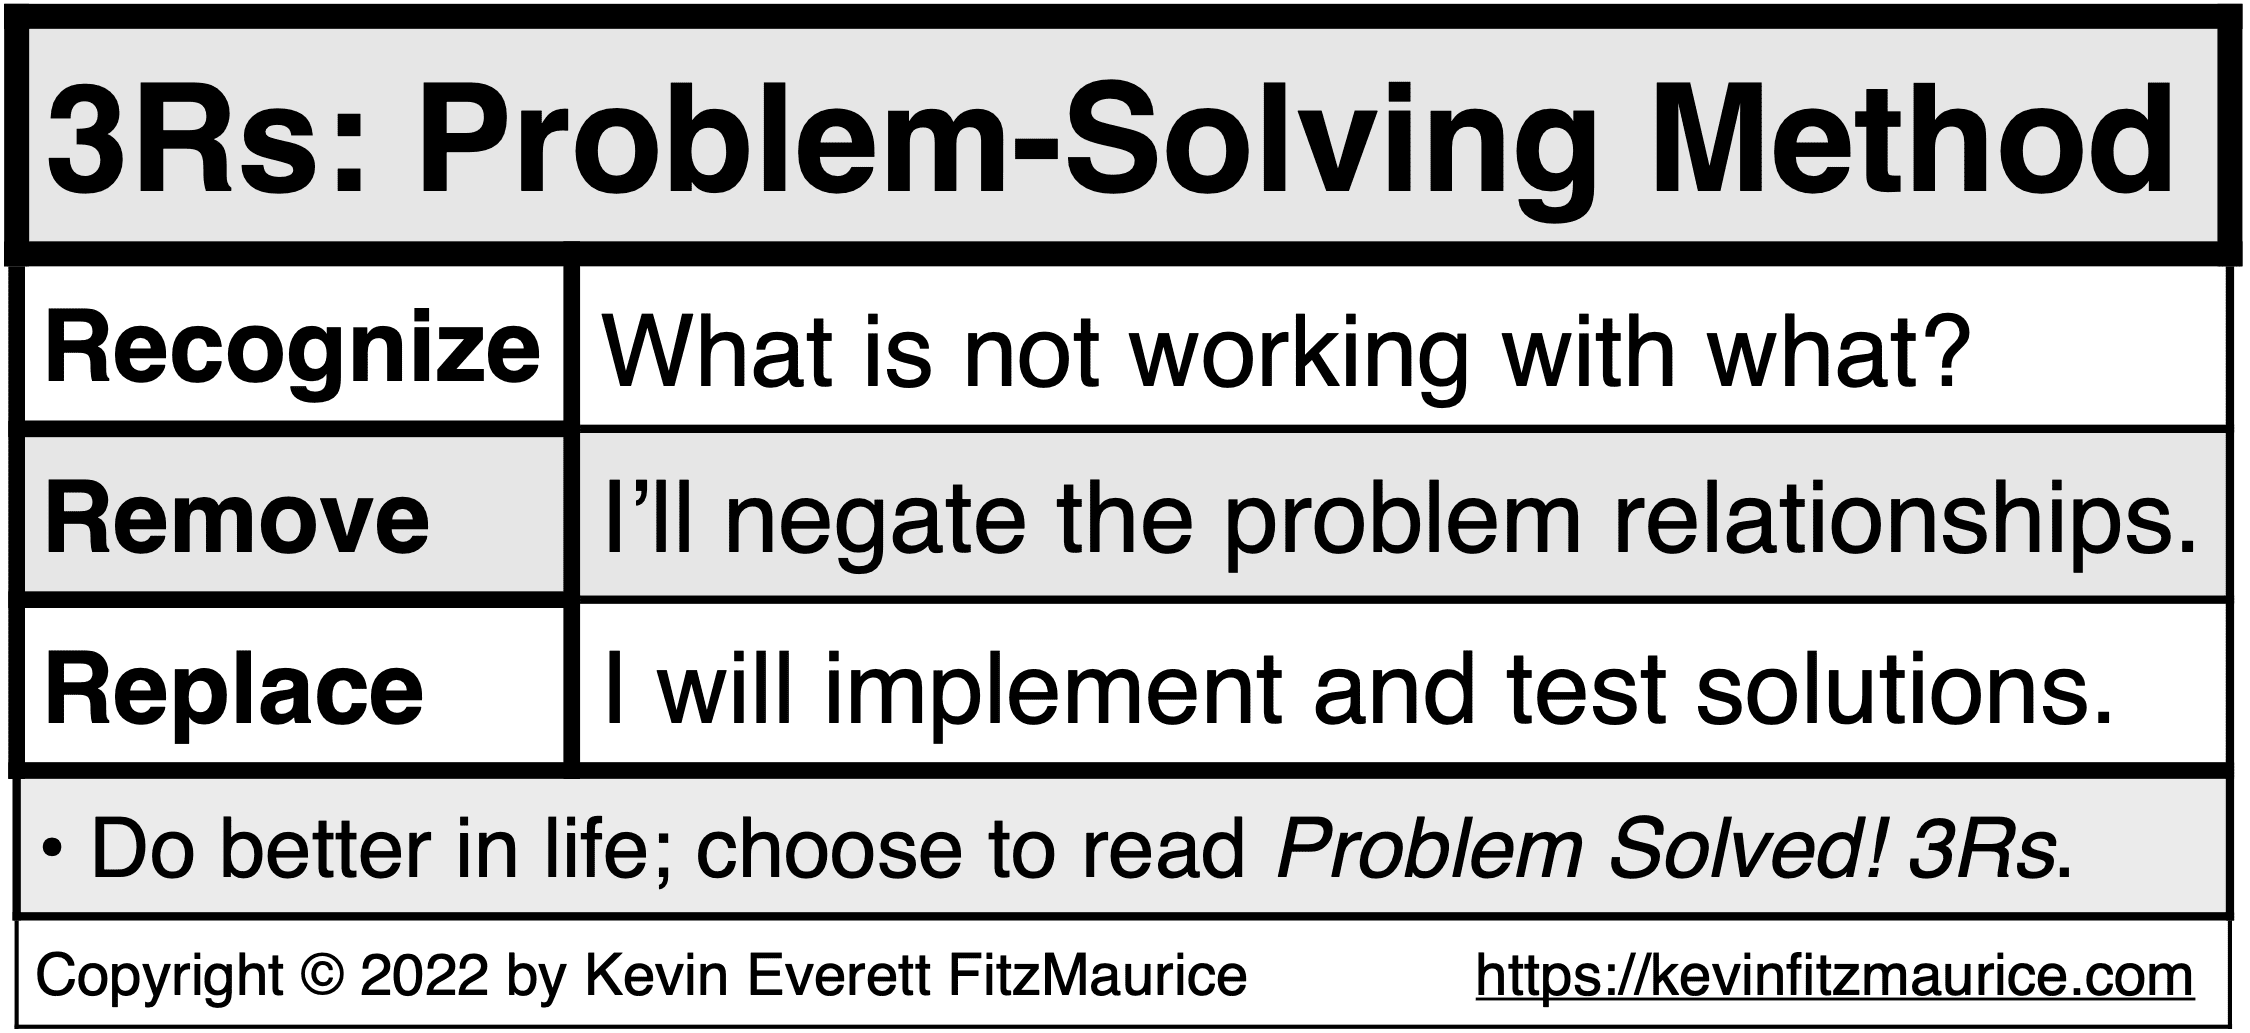 3Rs & Problem-Solving